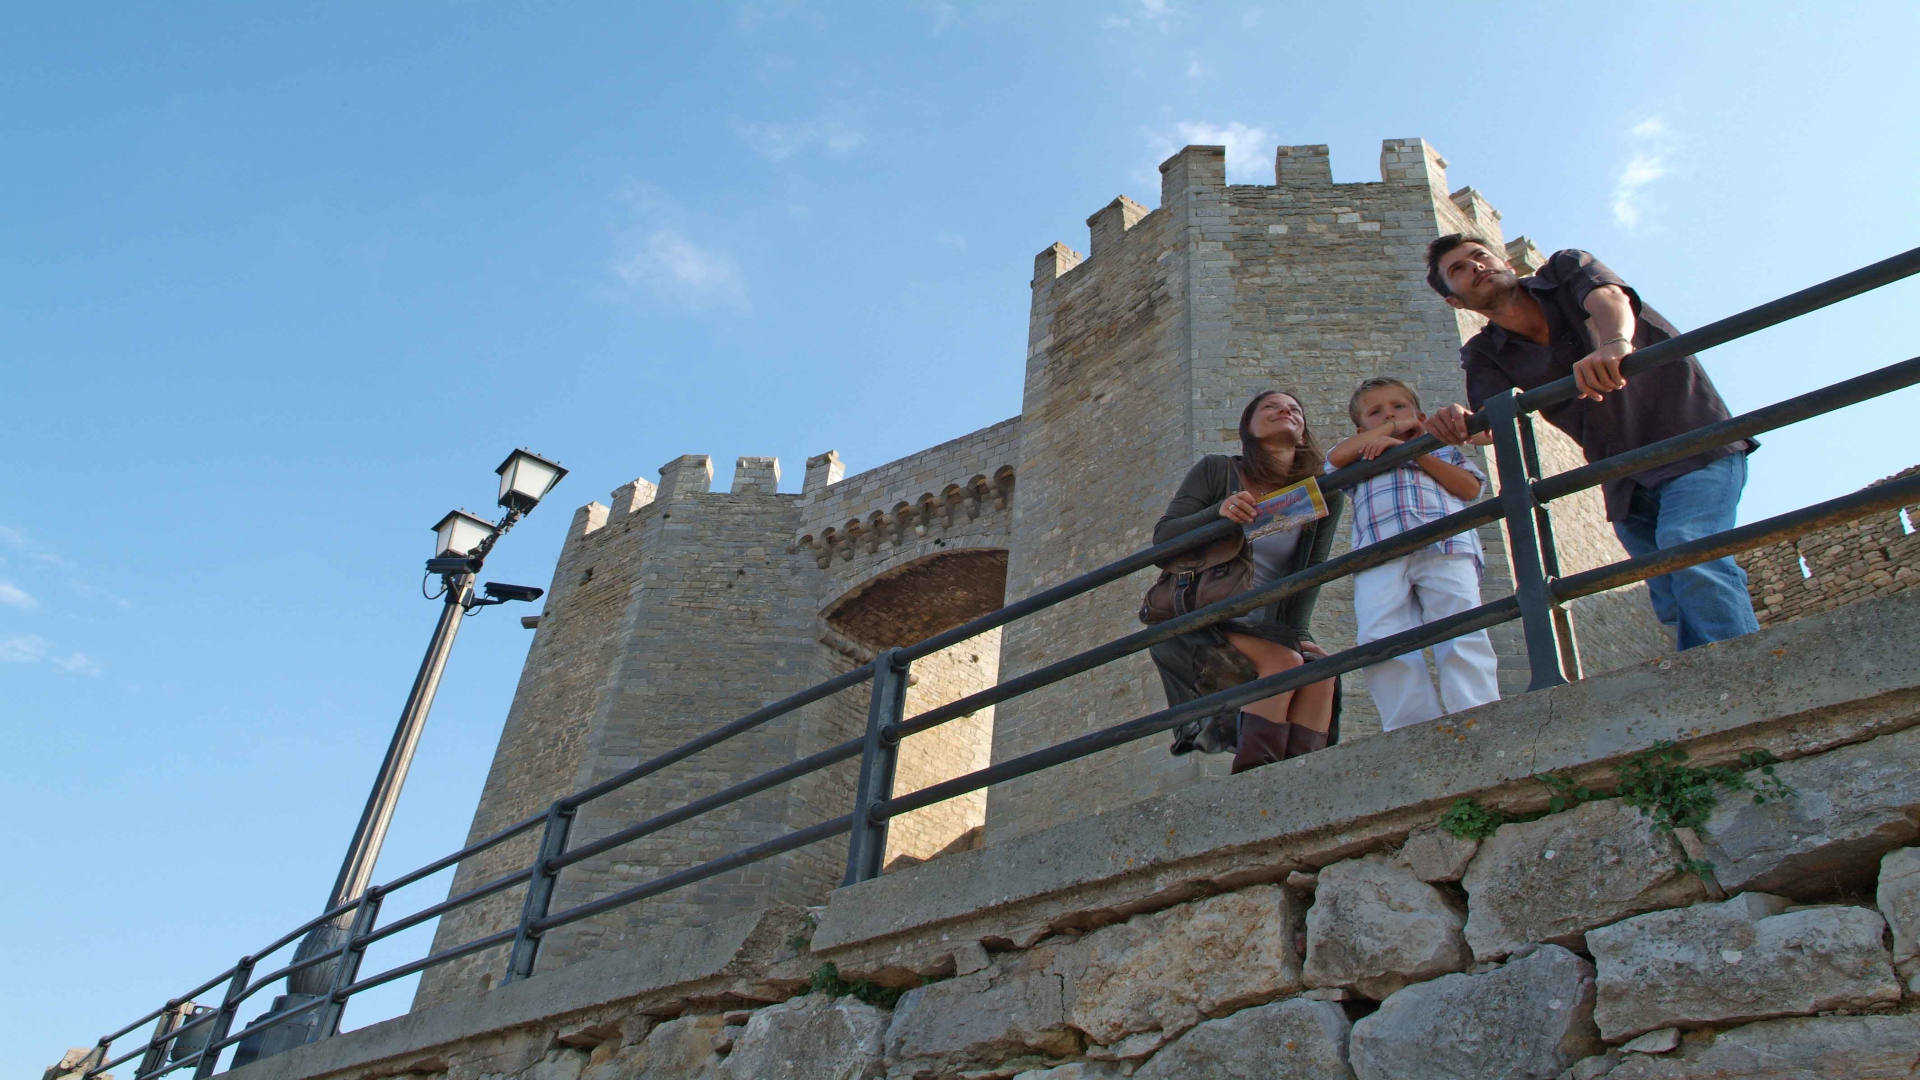 Discover Morella castle and curtain walls